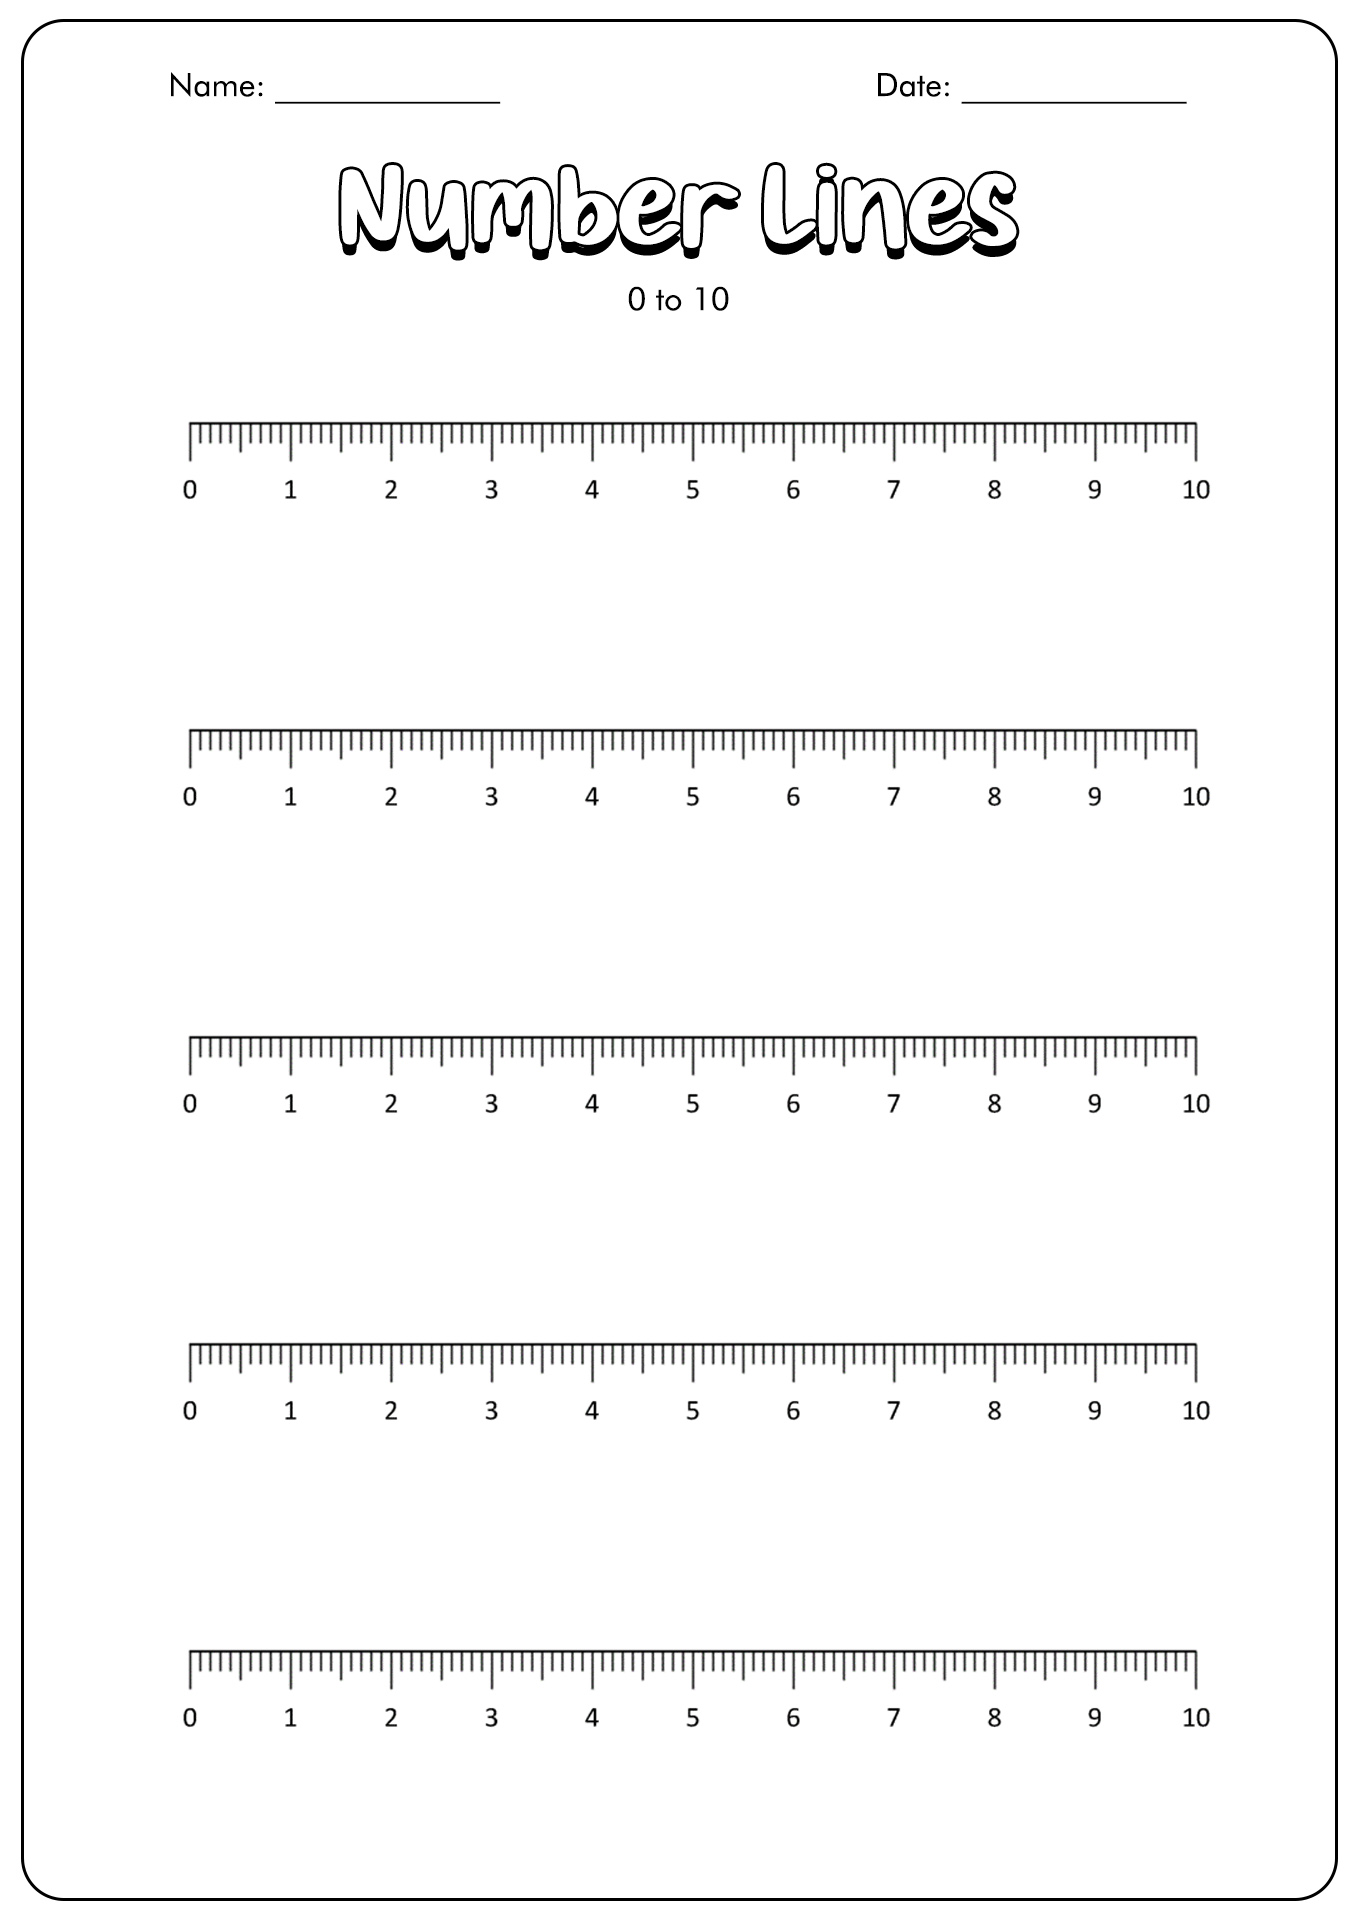 Number Lines with Decimals Worksheets